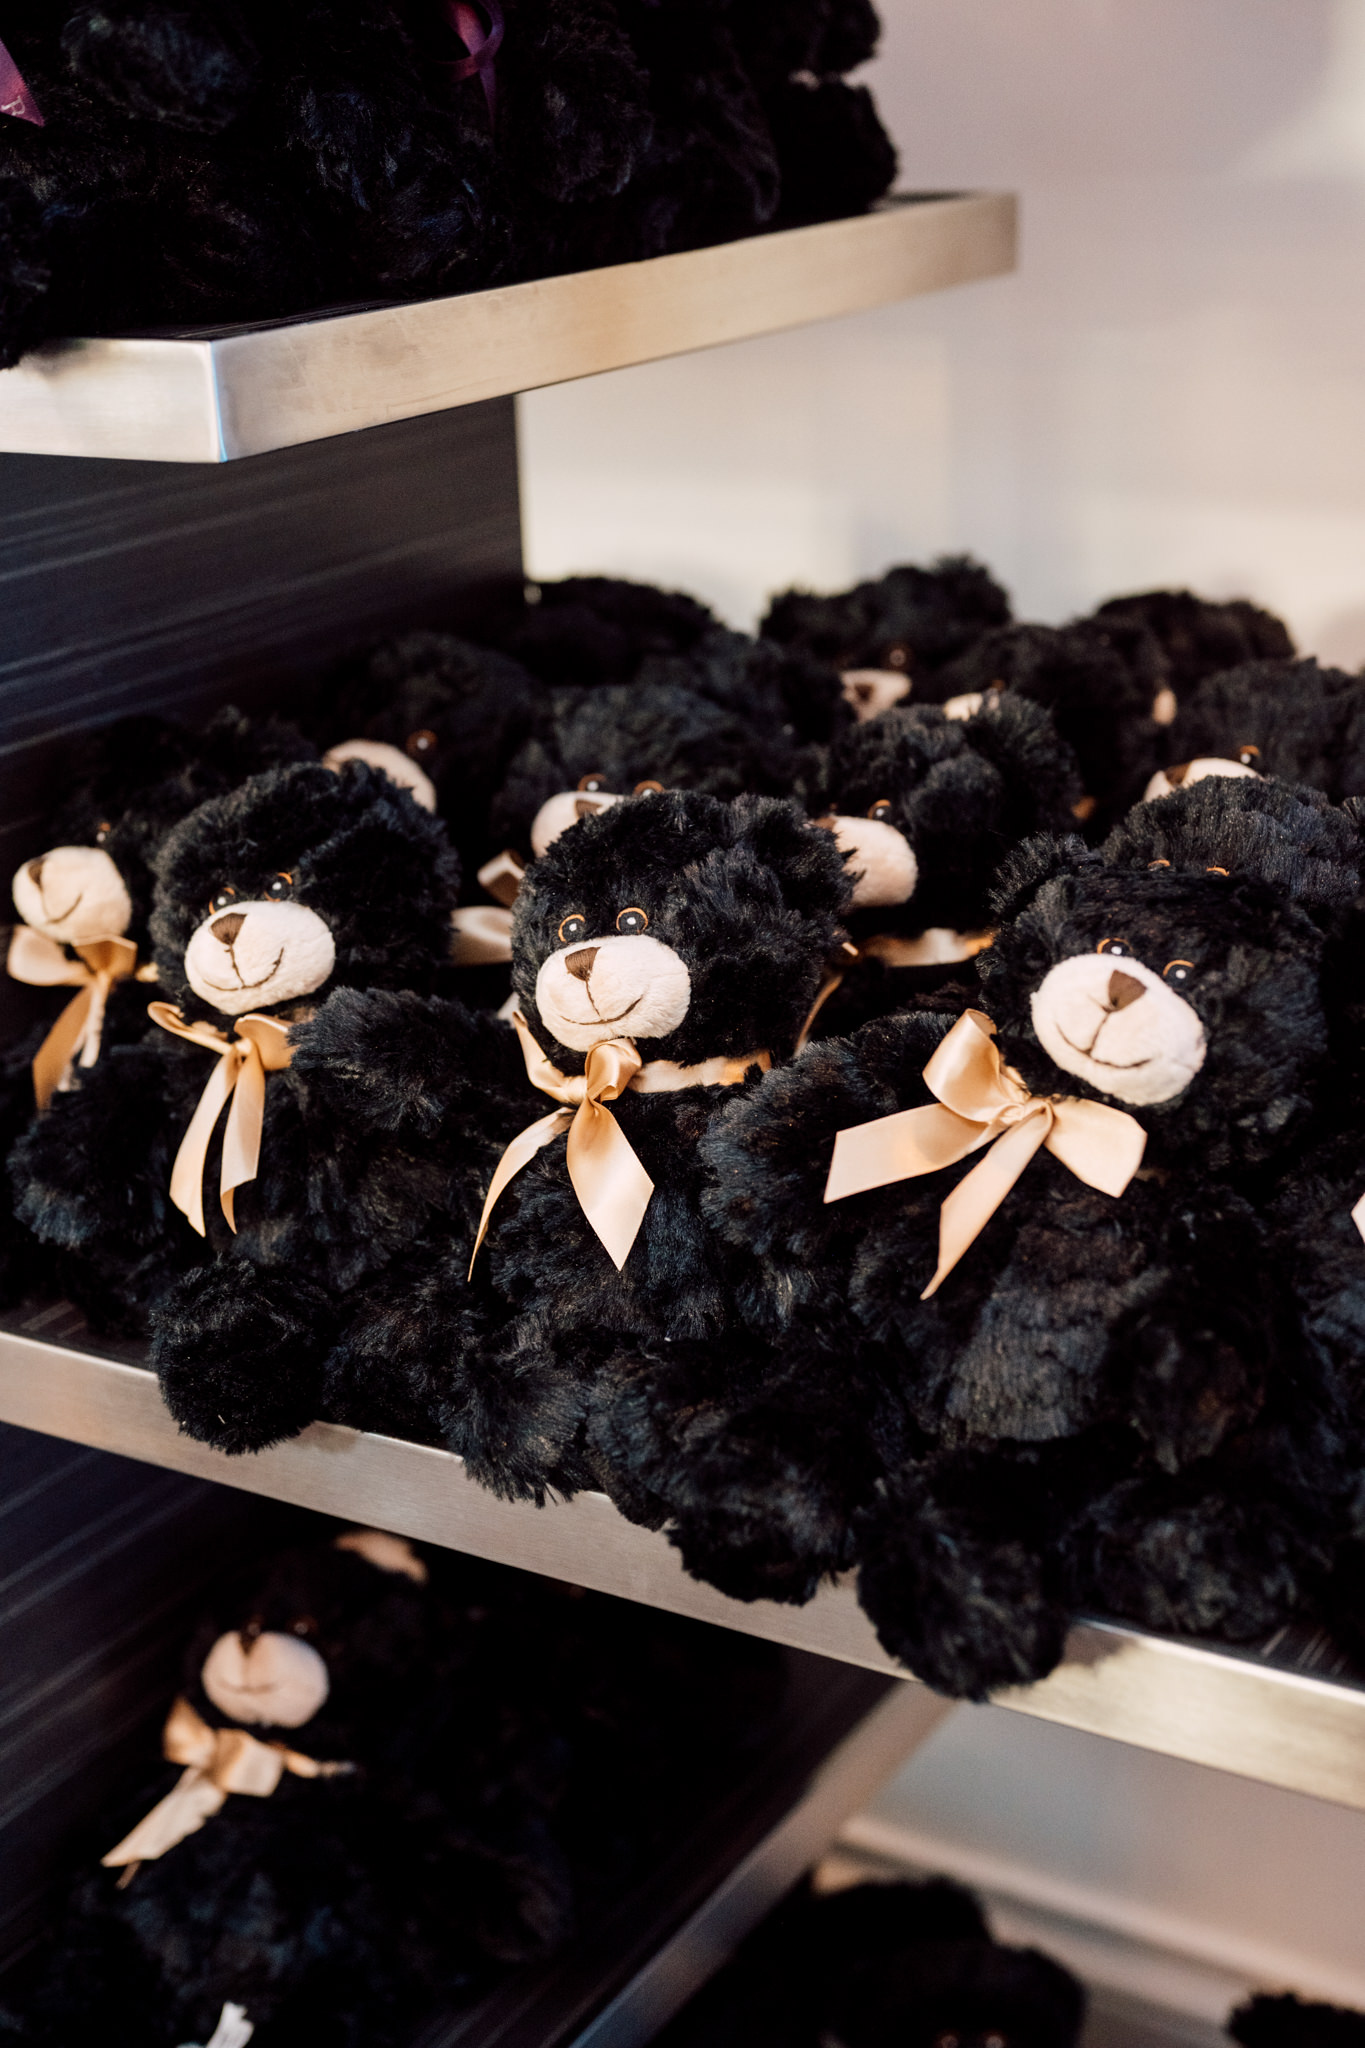 A shelf filled with black teddy bears.